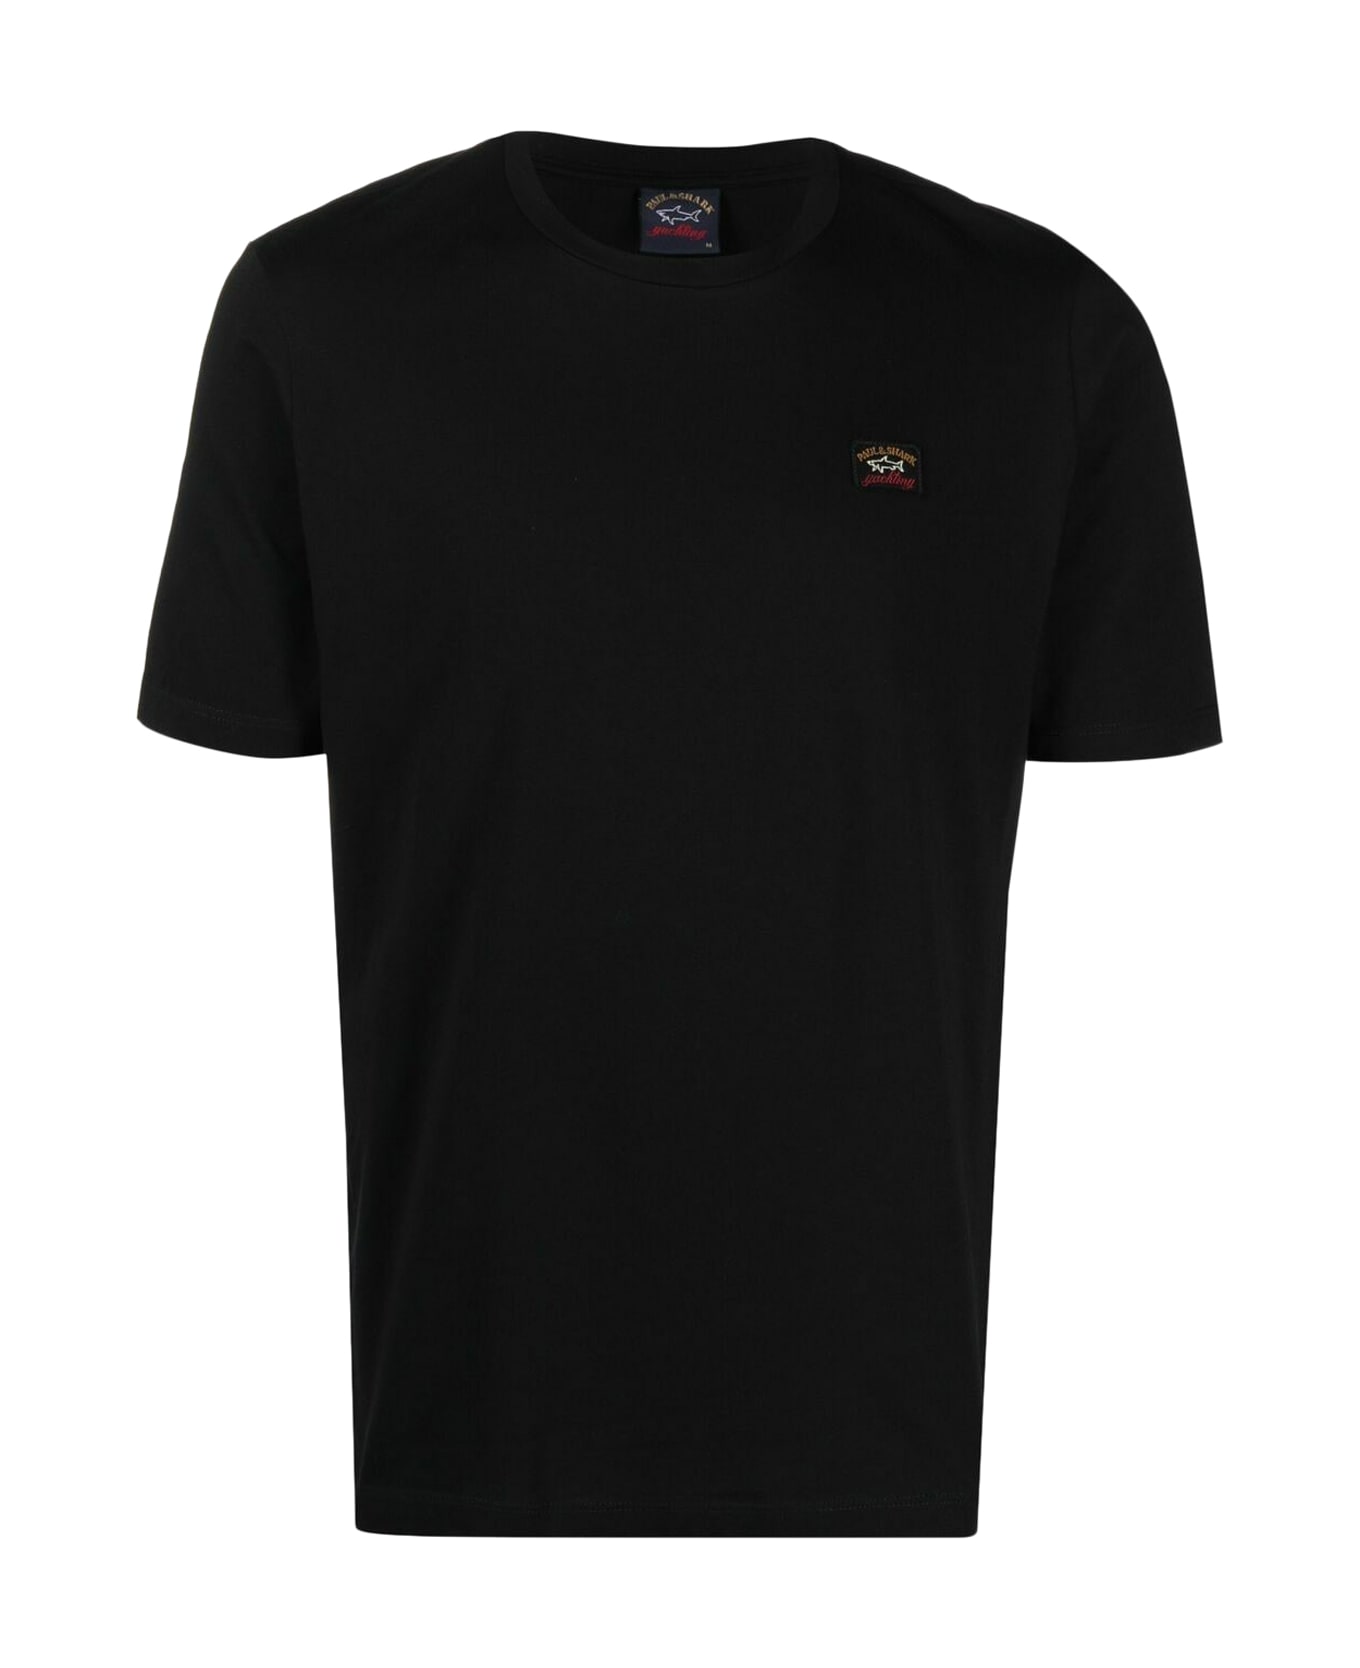 Paul&Shark T-shirt Cotton - Black シャツ